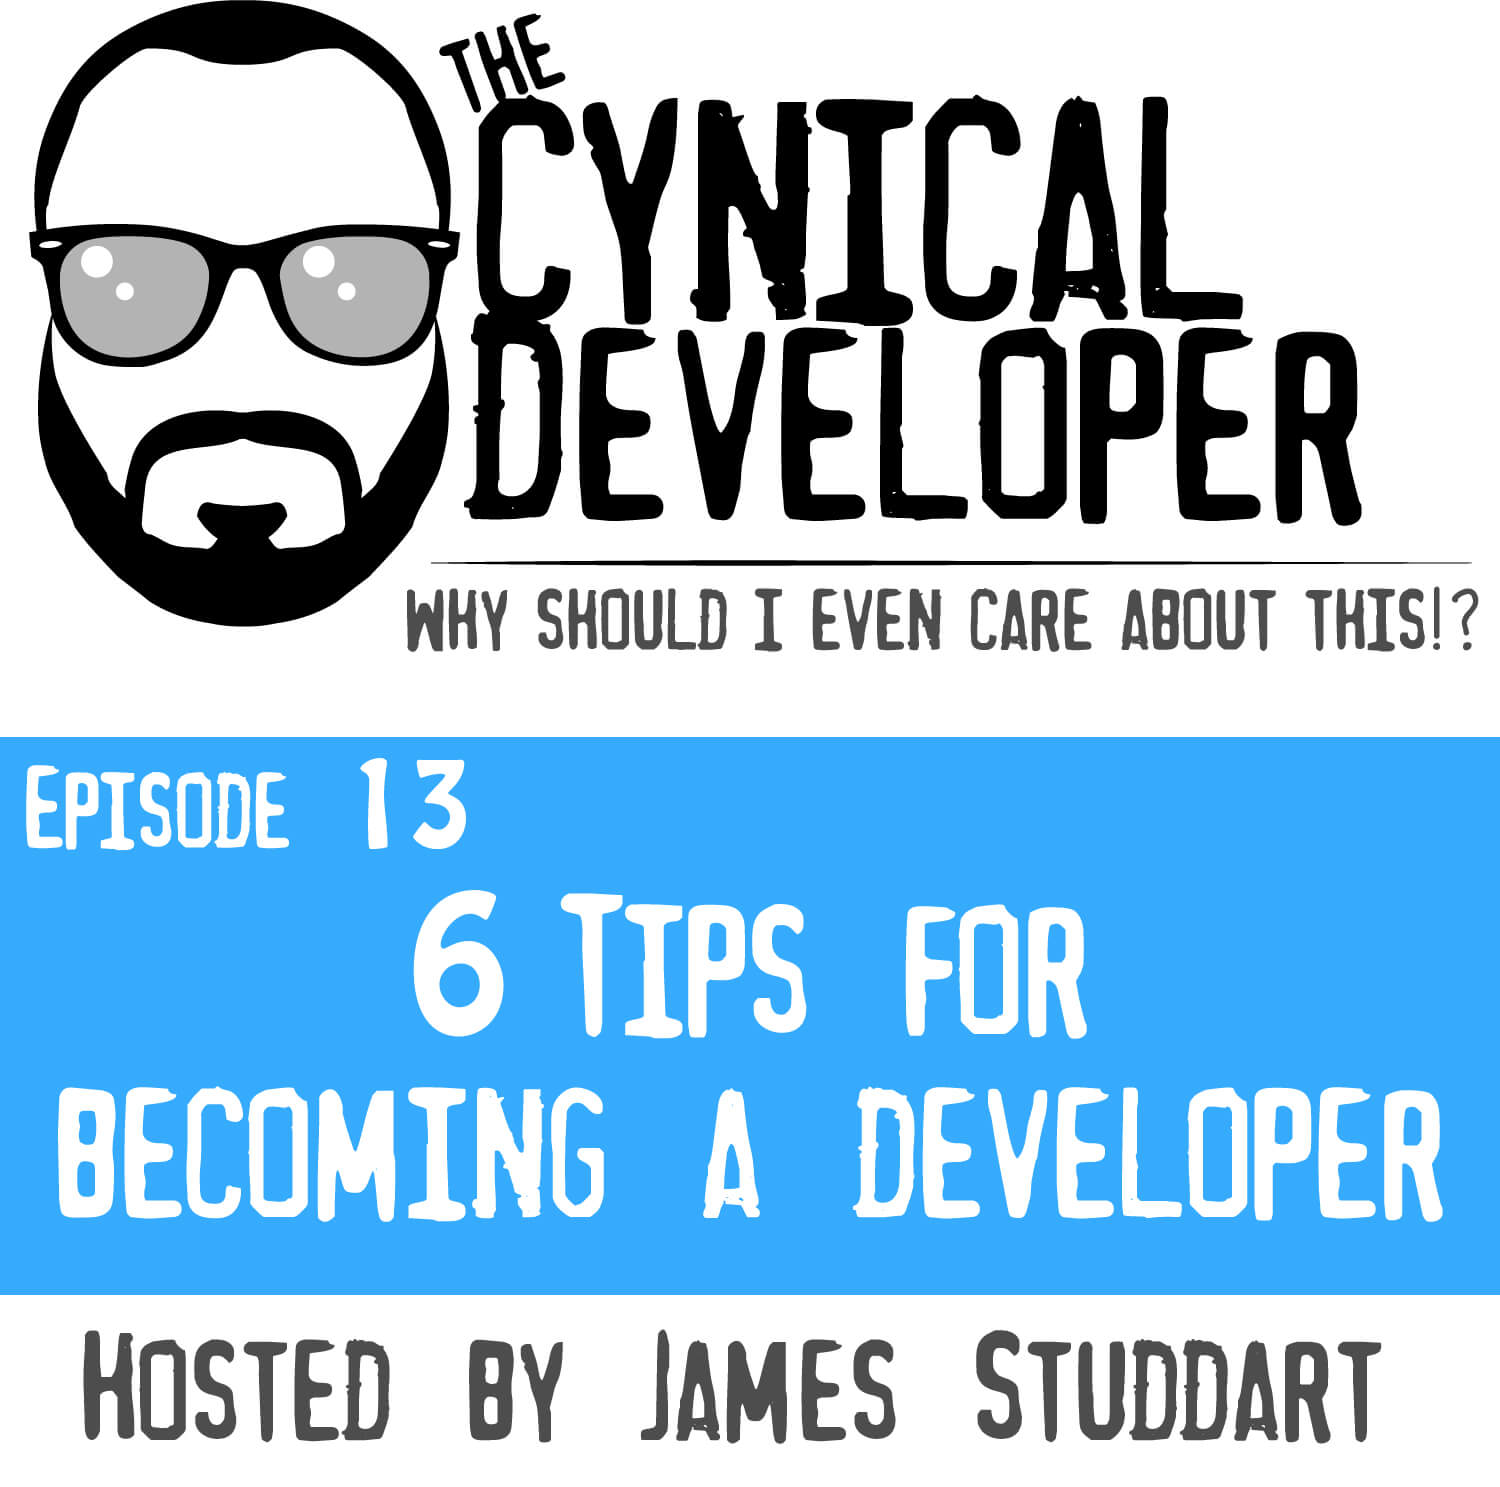 Episode 13 - Becoming a Developer